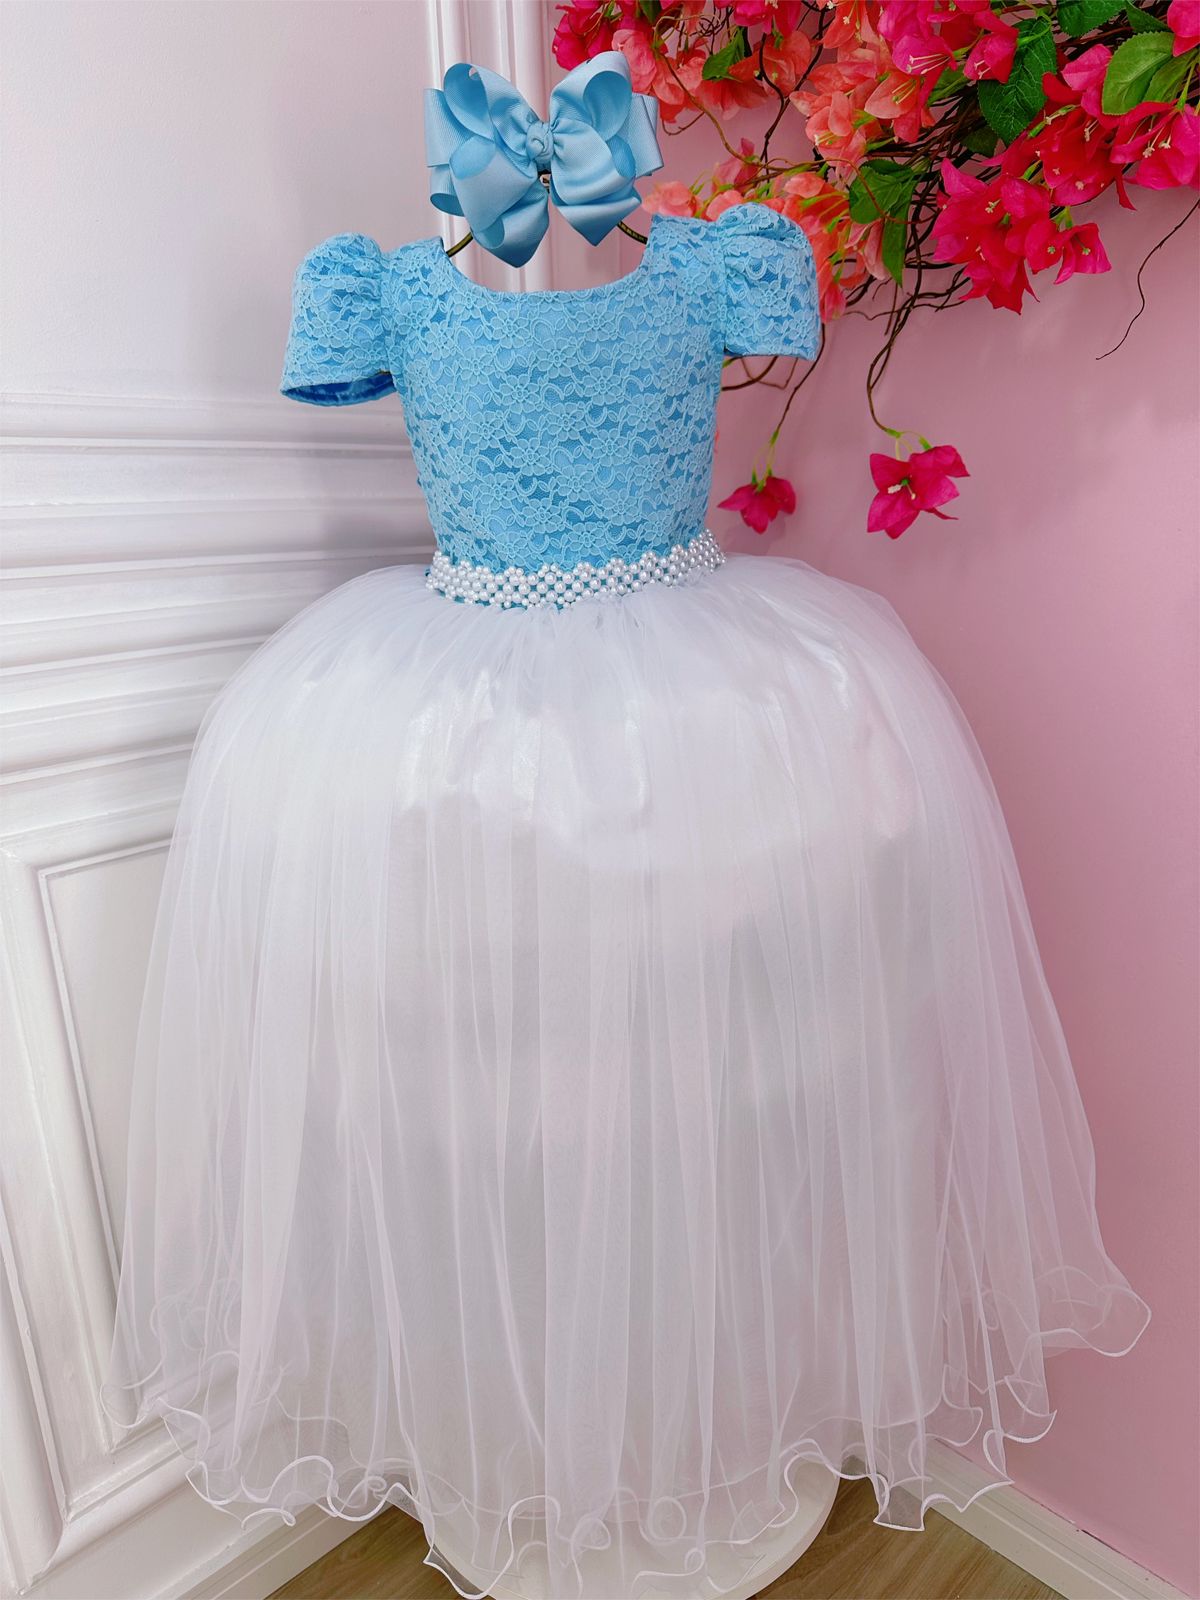 Vestido Dama De Honra Longo Super Luxo Azul - 4 Ao 16